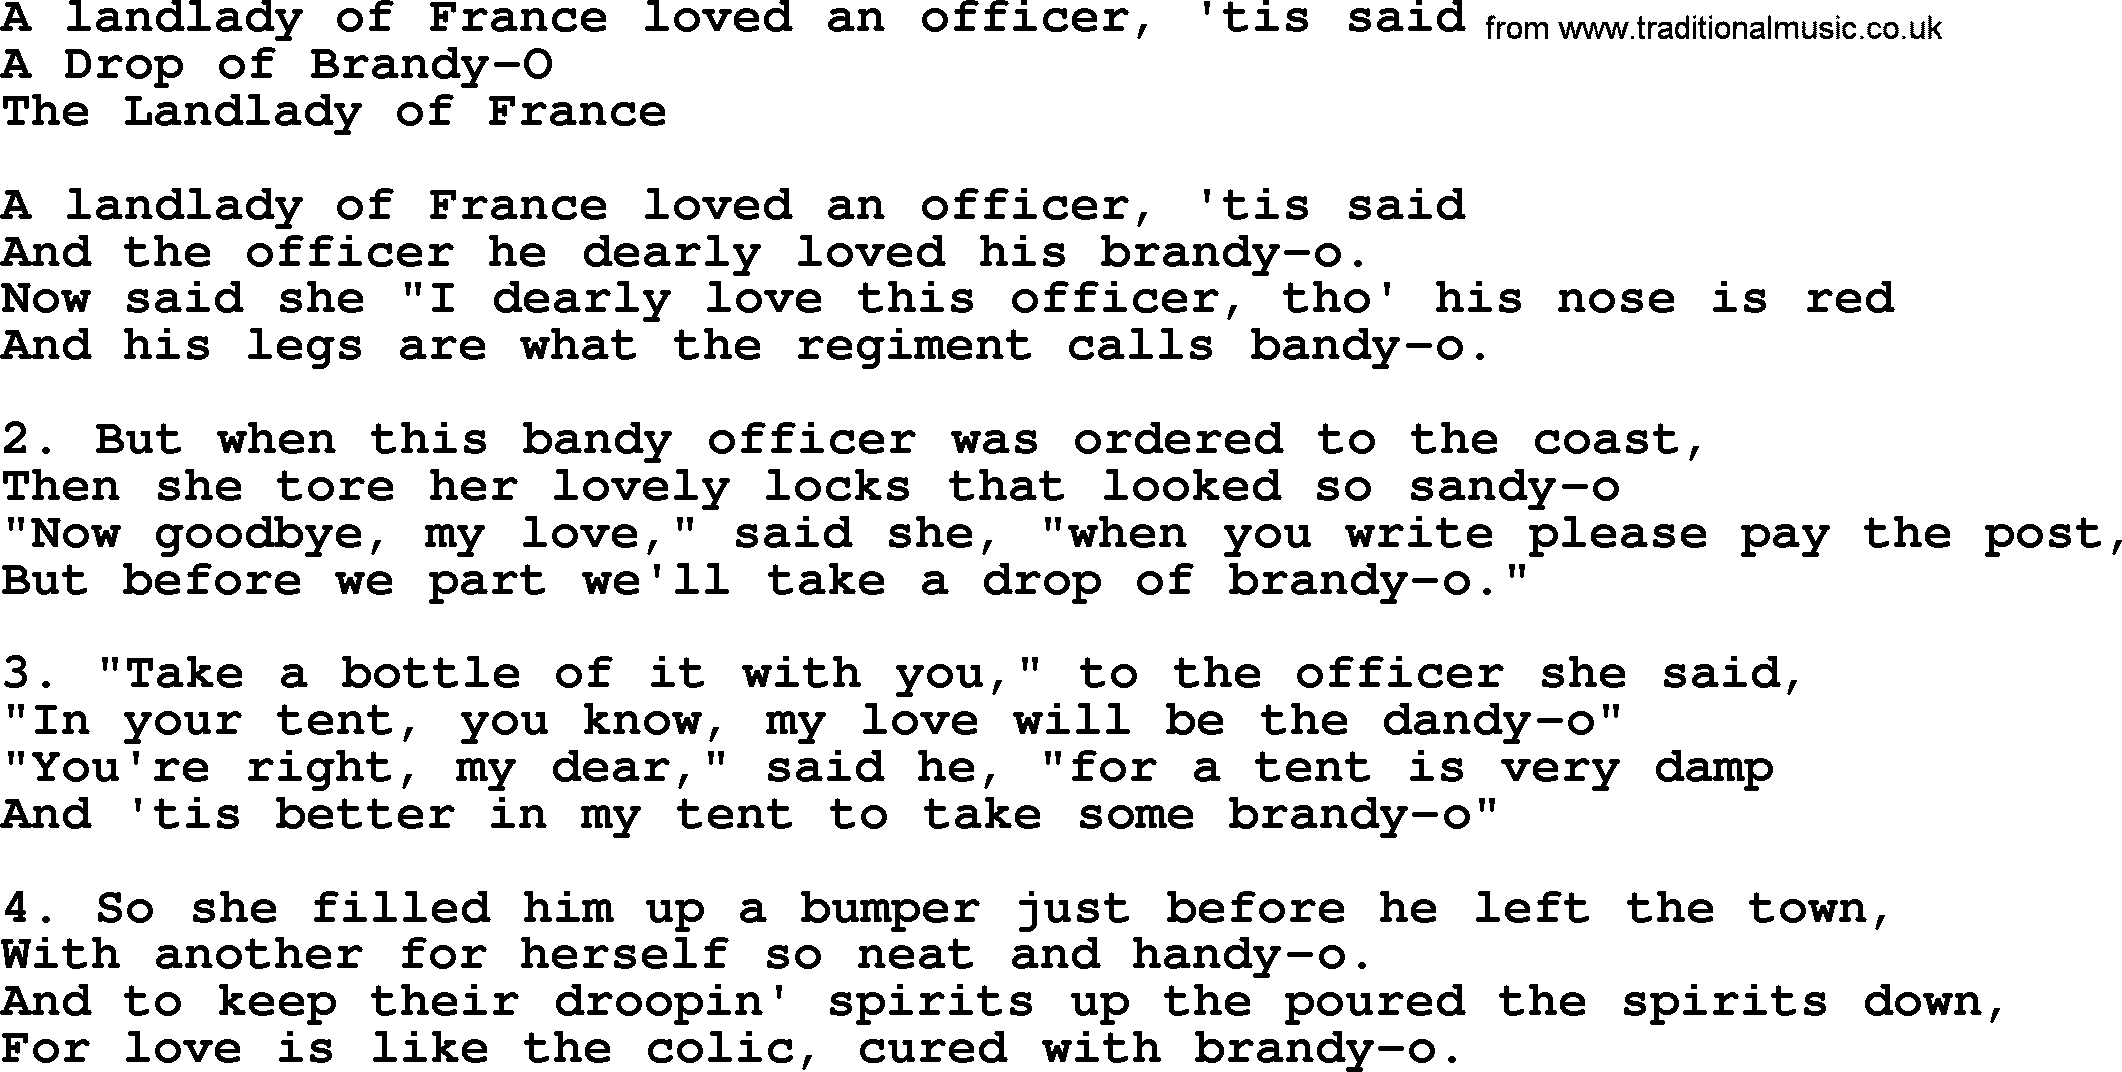 Sea Song or Shantie: A Landlady Of France Loved An Officer Tis Said, lyrics